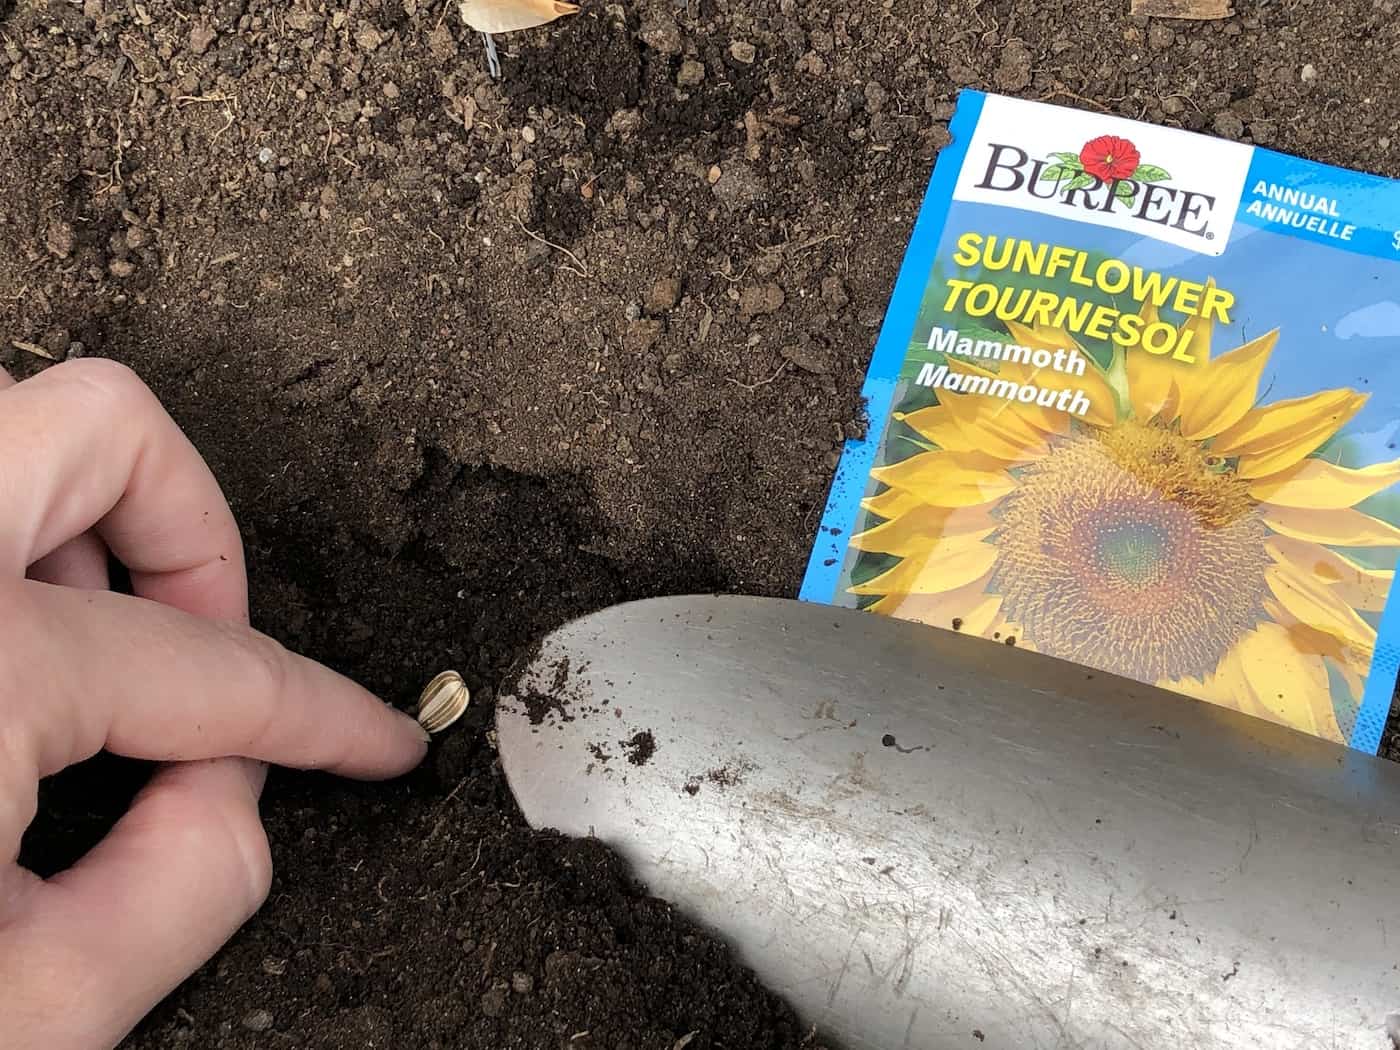 Planting sunflower seeds outdoors